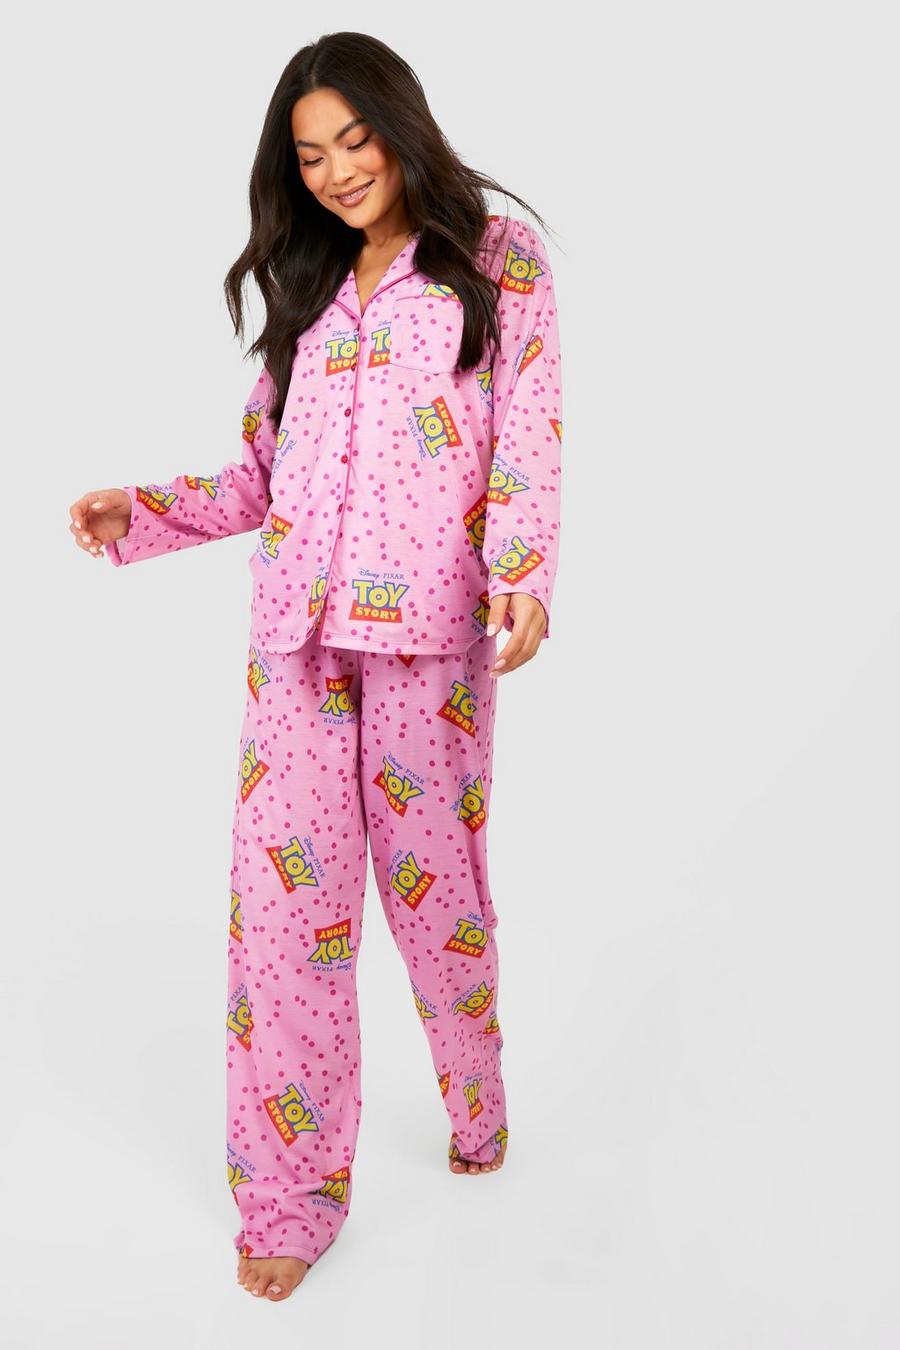 pyjama femme imprime mickey et minnie - disney rose pyjamas